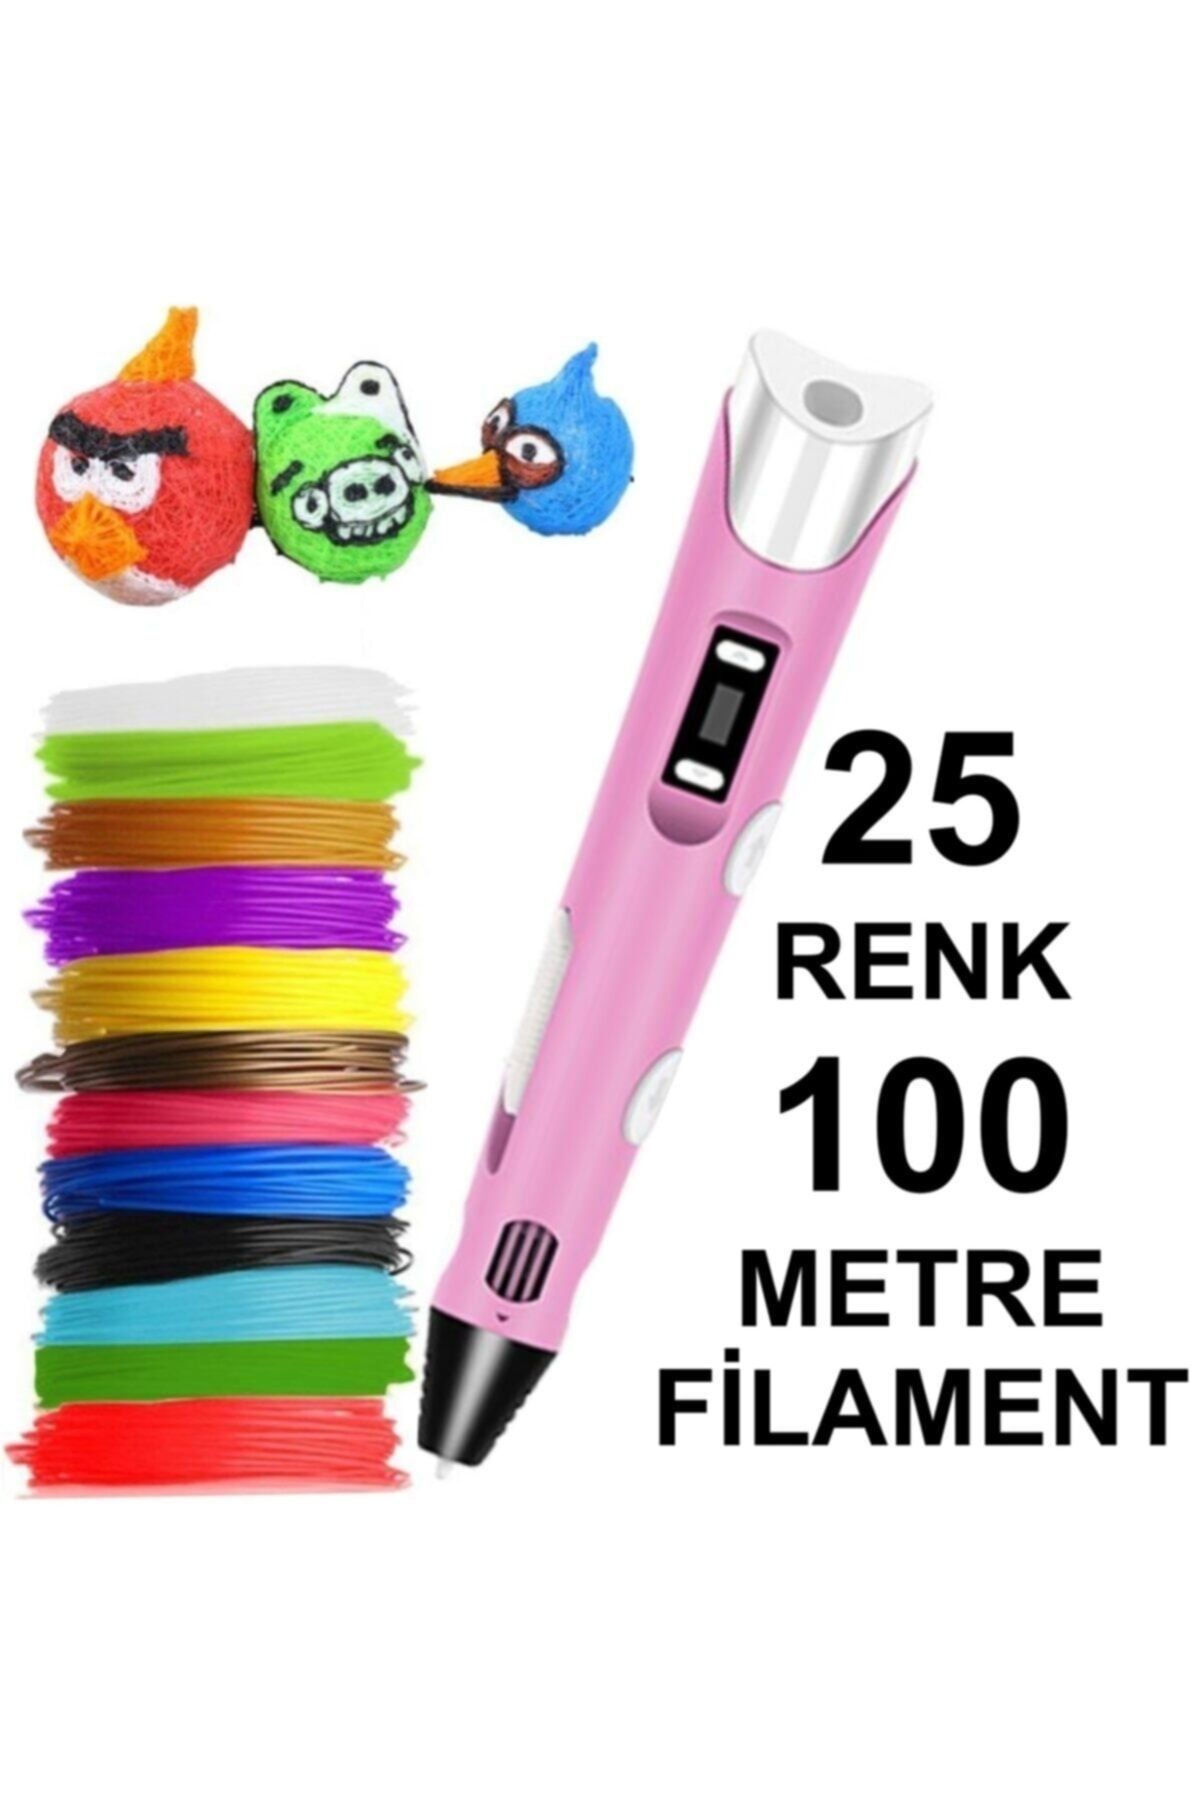 3D Pembe Kalem Yazıcı+25 Renk 100 Metre (25x4metre) Pla Filament